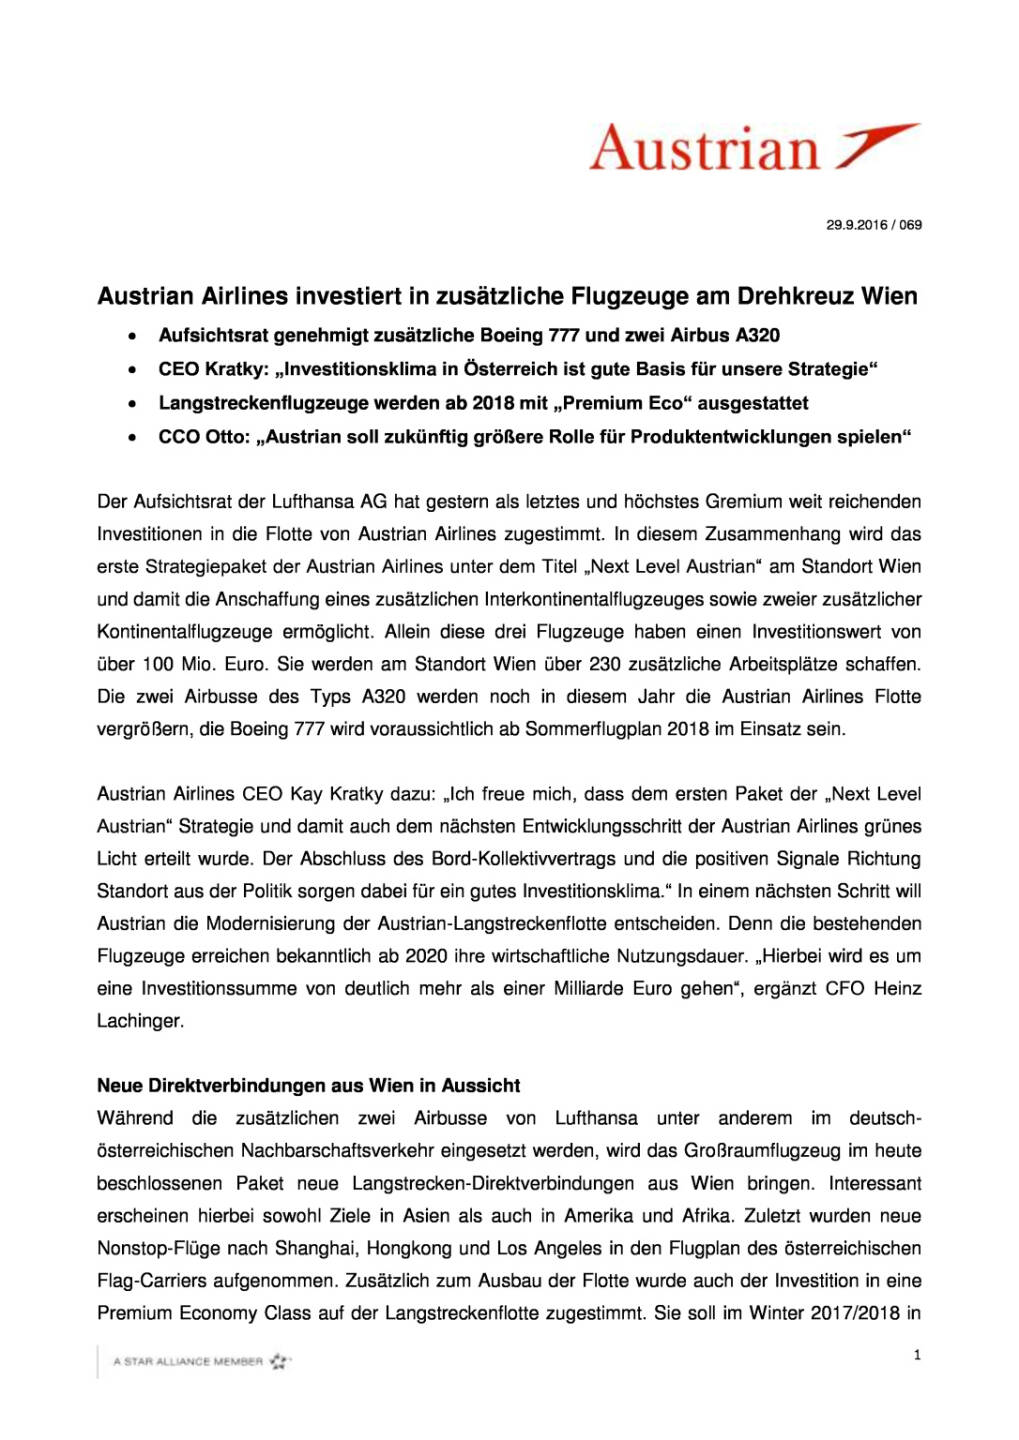 Austrian Airlines investiert in zusätzliche Flugzeuge am Drehkreuz Wien, Seite 1/4, komplettes Dokument unter http://boerse-social.com/static/uploads/file_1853_austrian_airlines_investiert_in_zusatzliche_flugzeuge_am_drehkreuz_wien.pdf